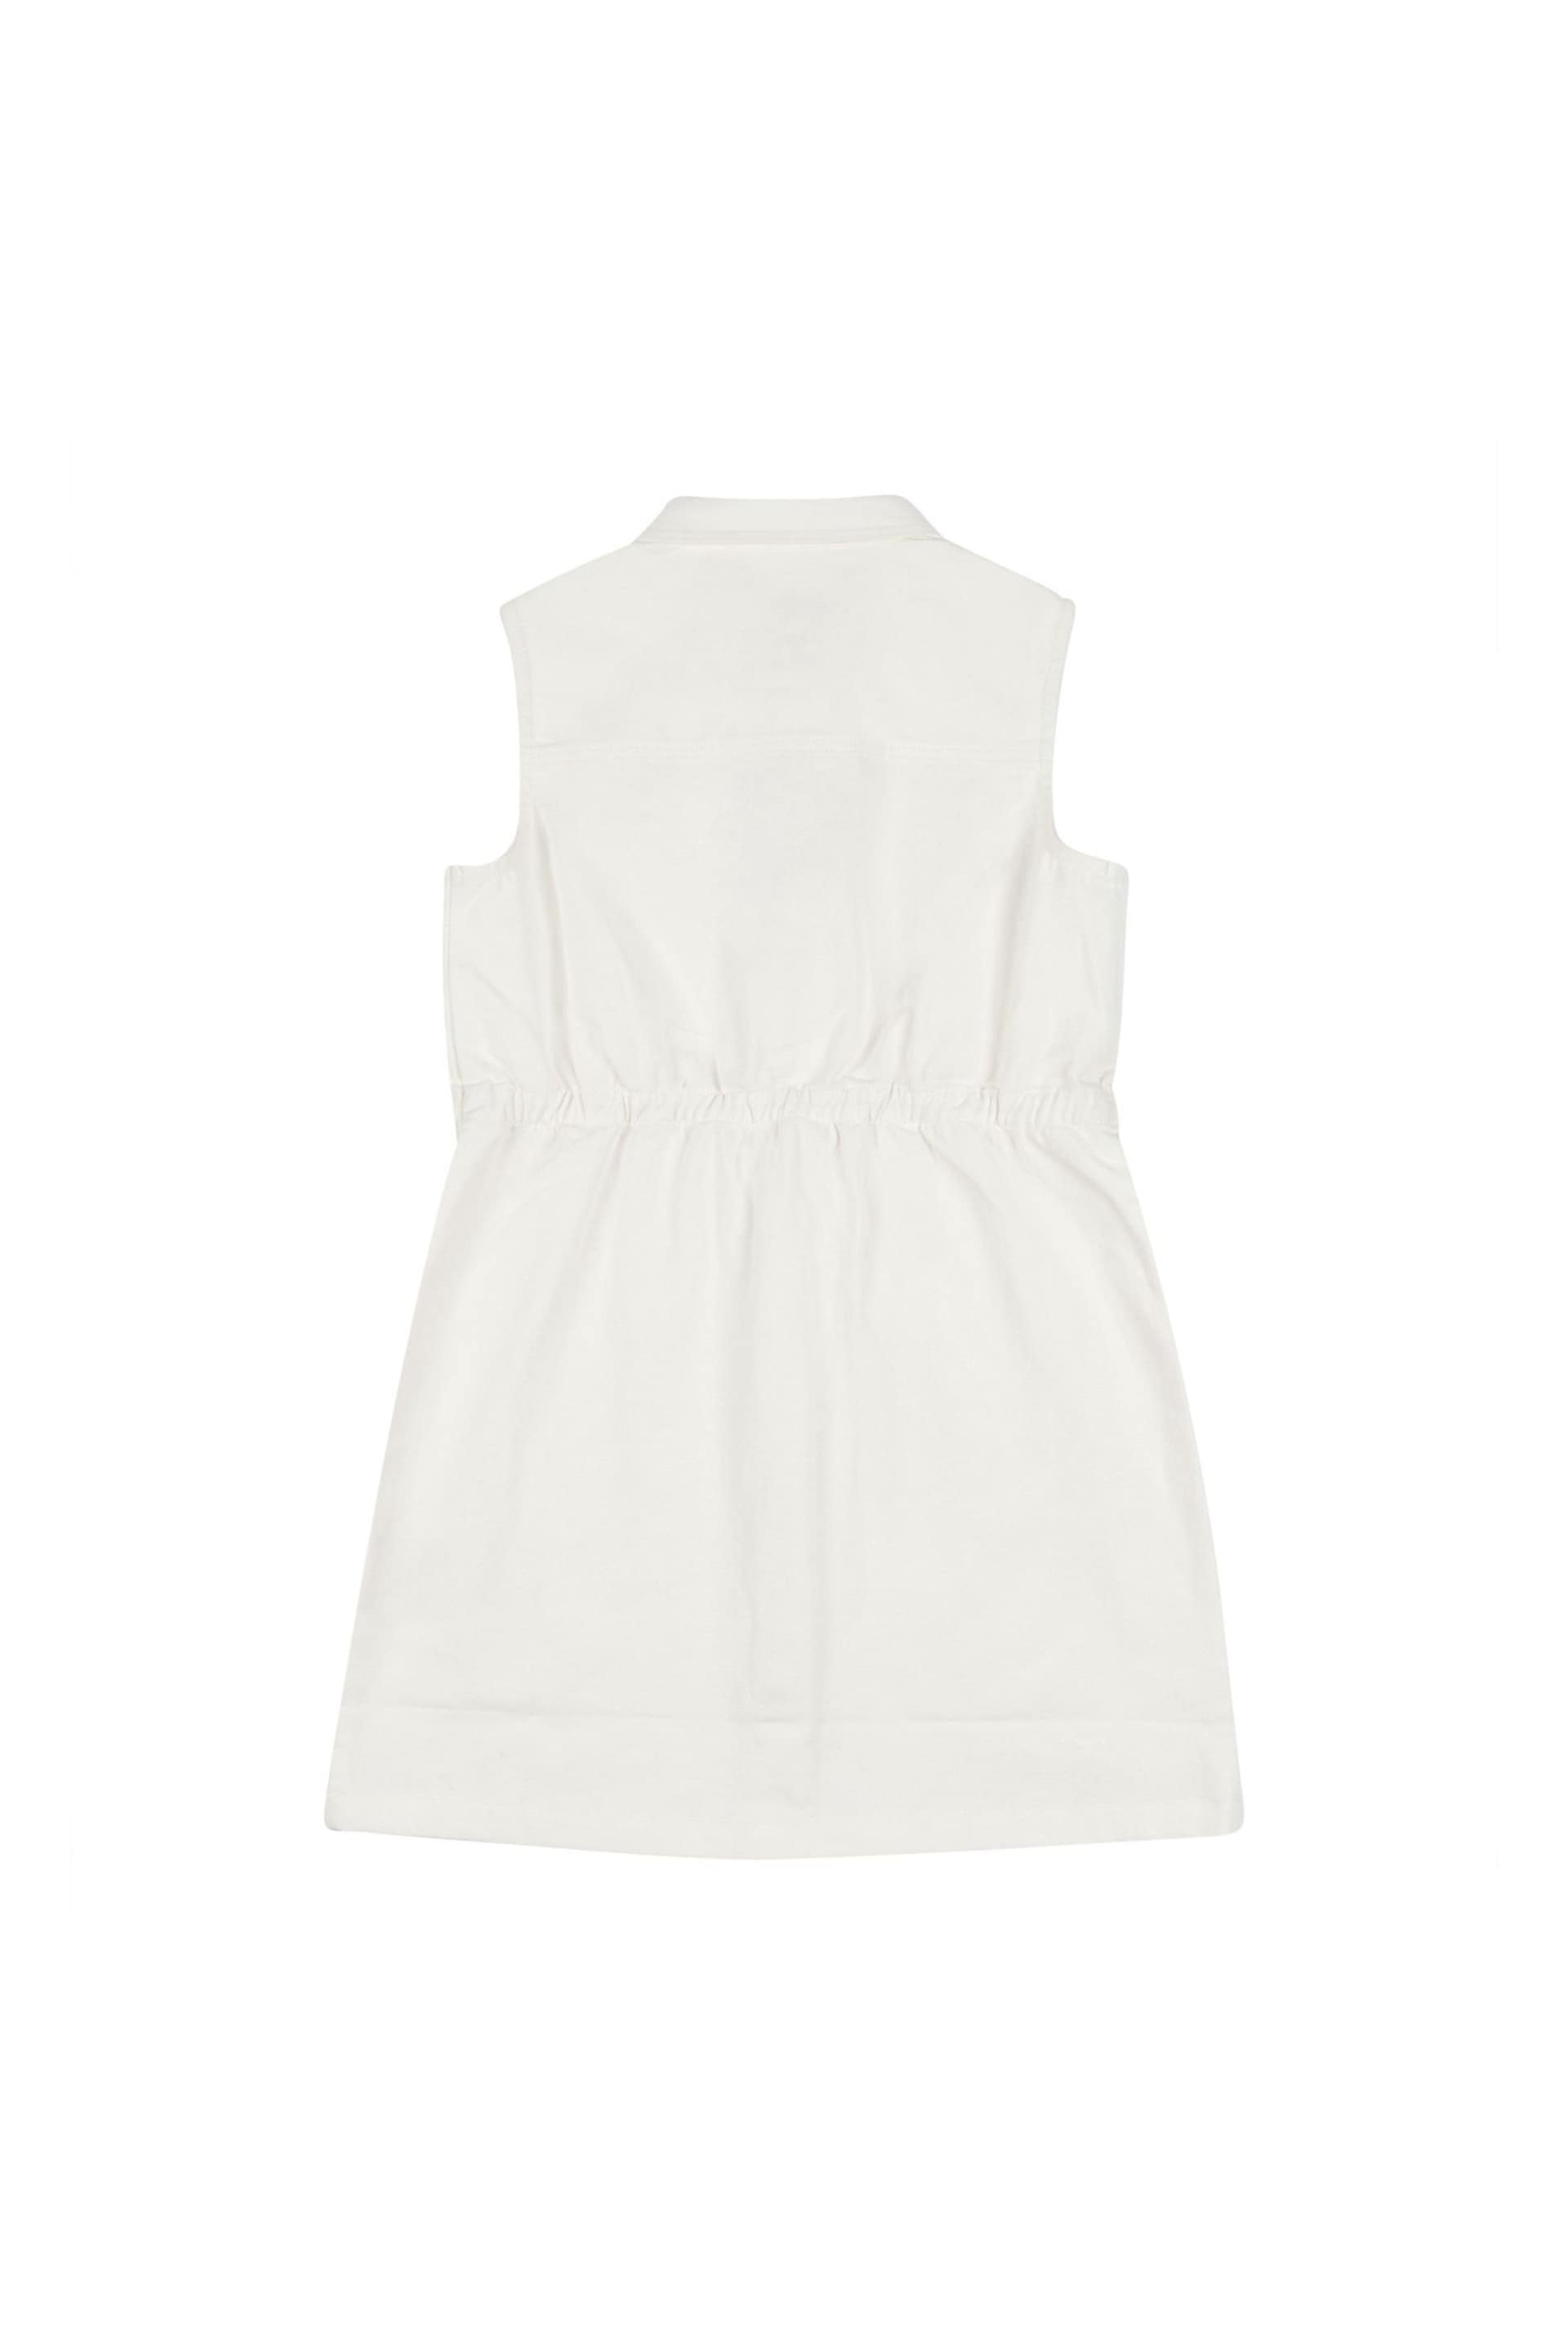 Lee Girls Sleeveless Twill White Dress - Image 7 of 8